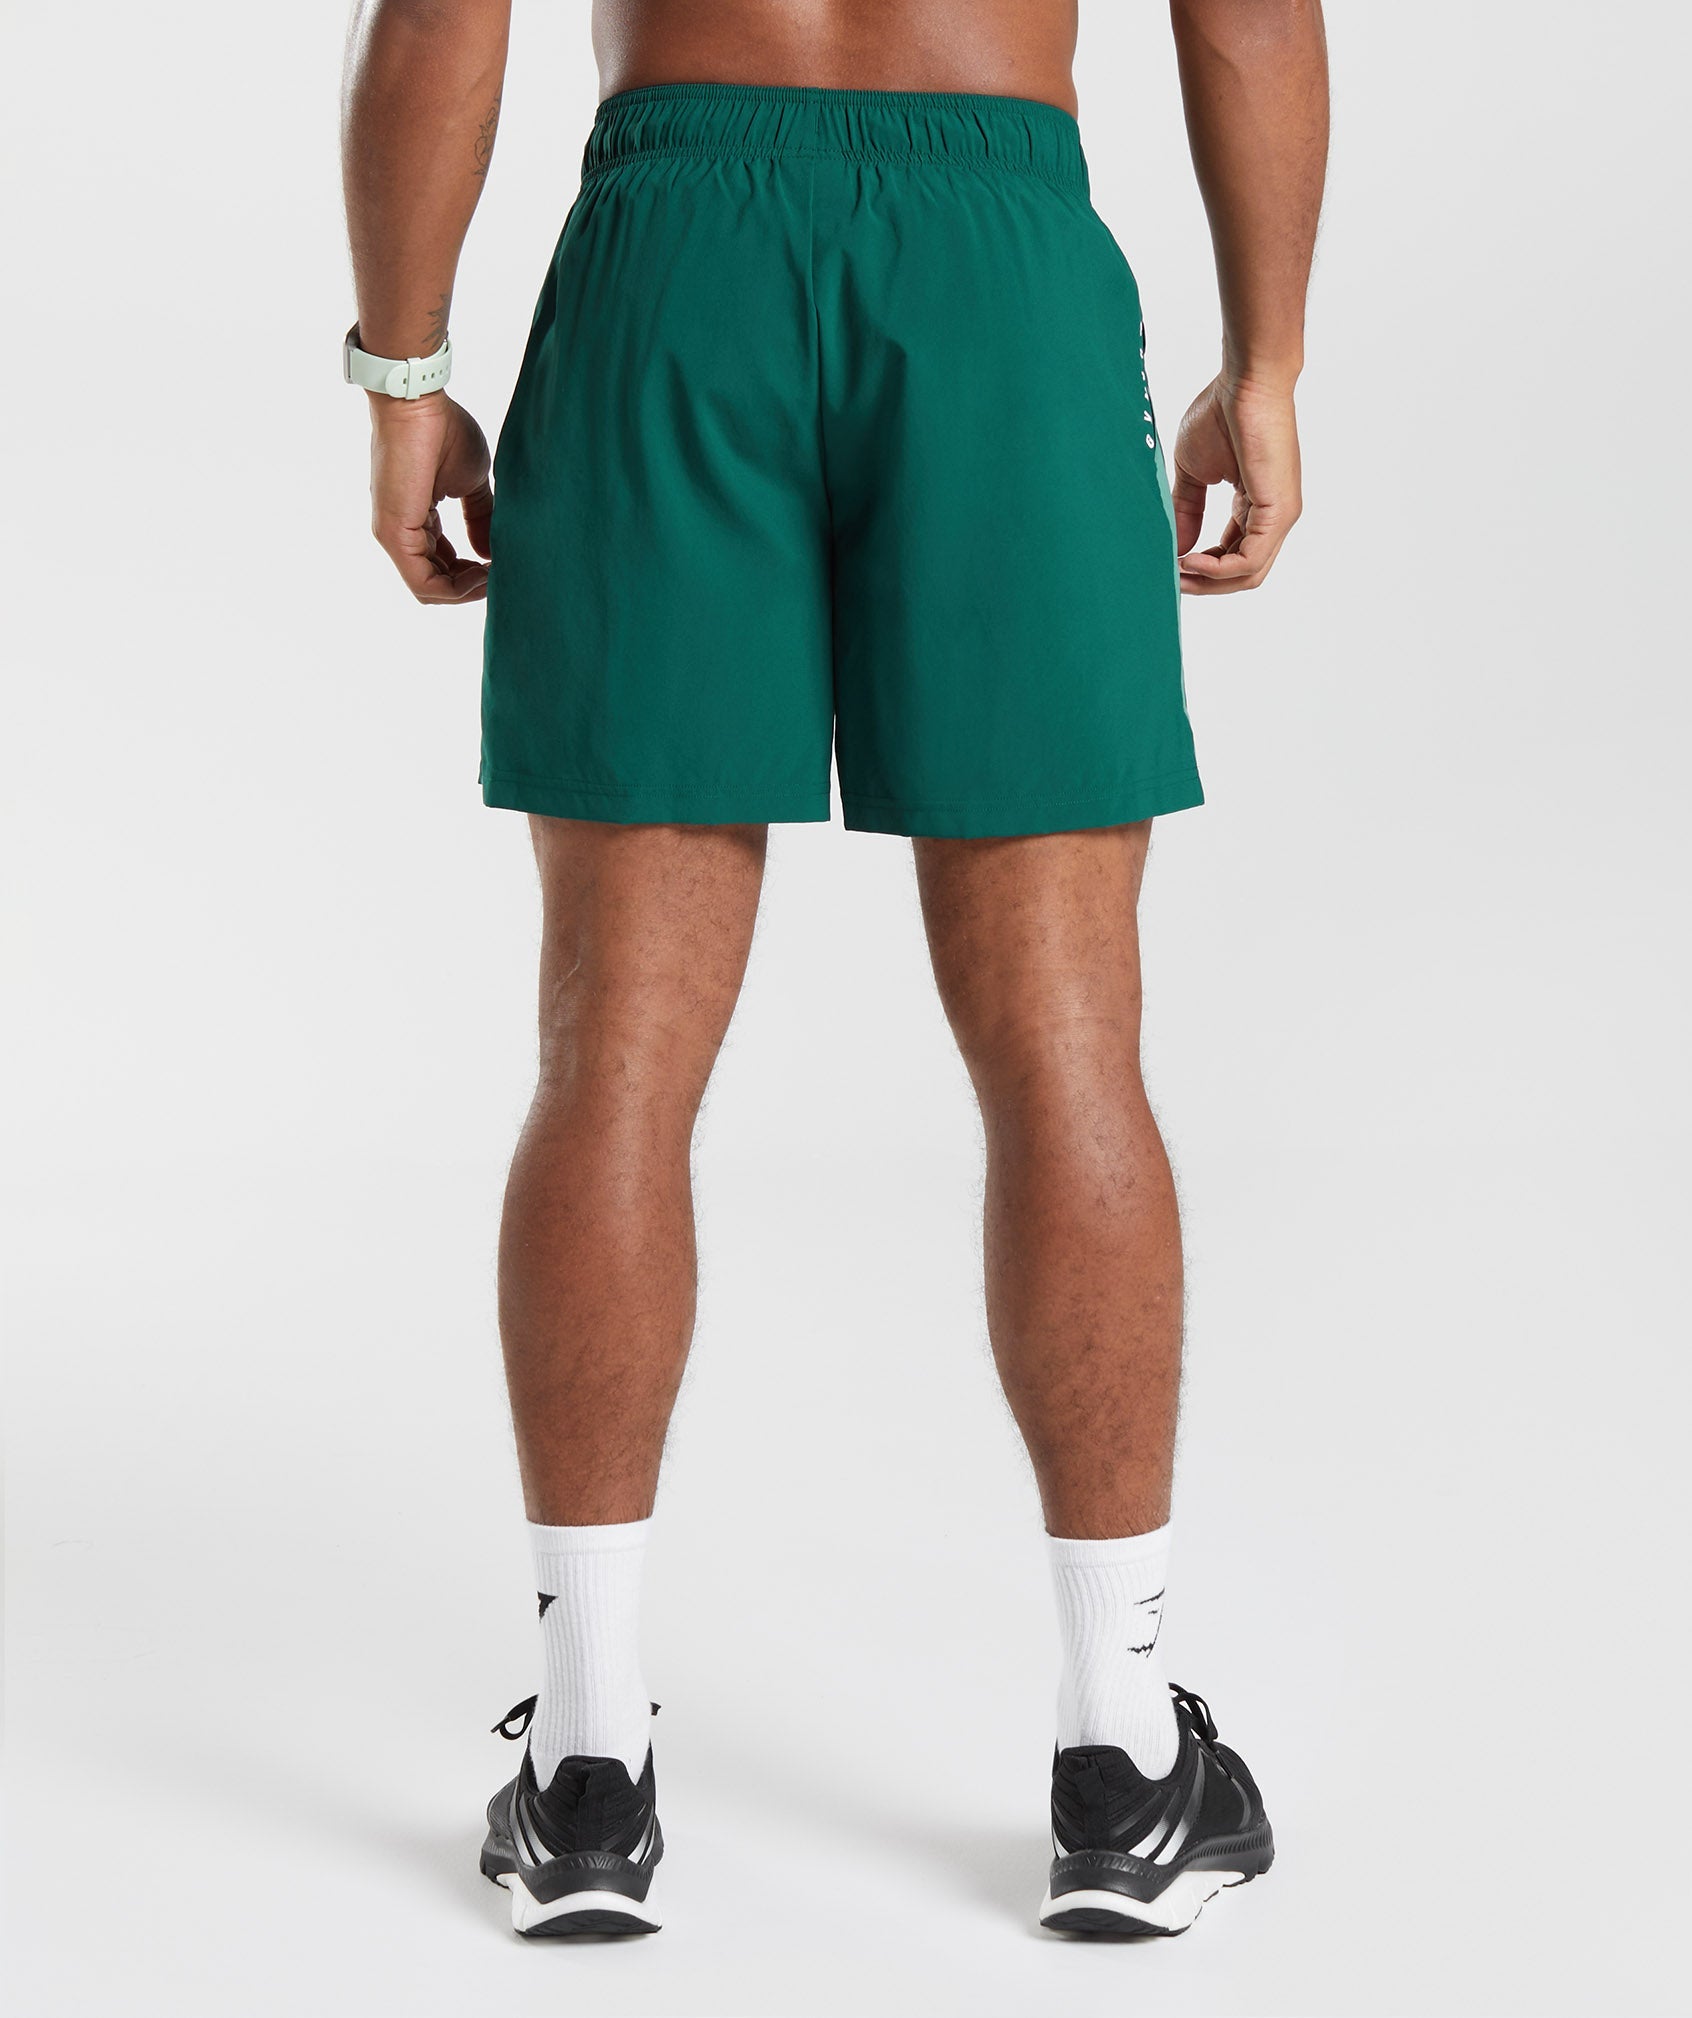 colorfulkoala Color Block Green Athletic Shorts Size XL - 56% off